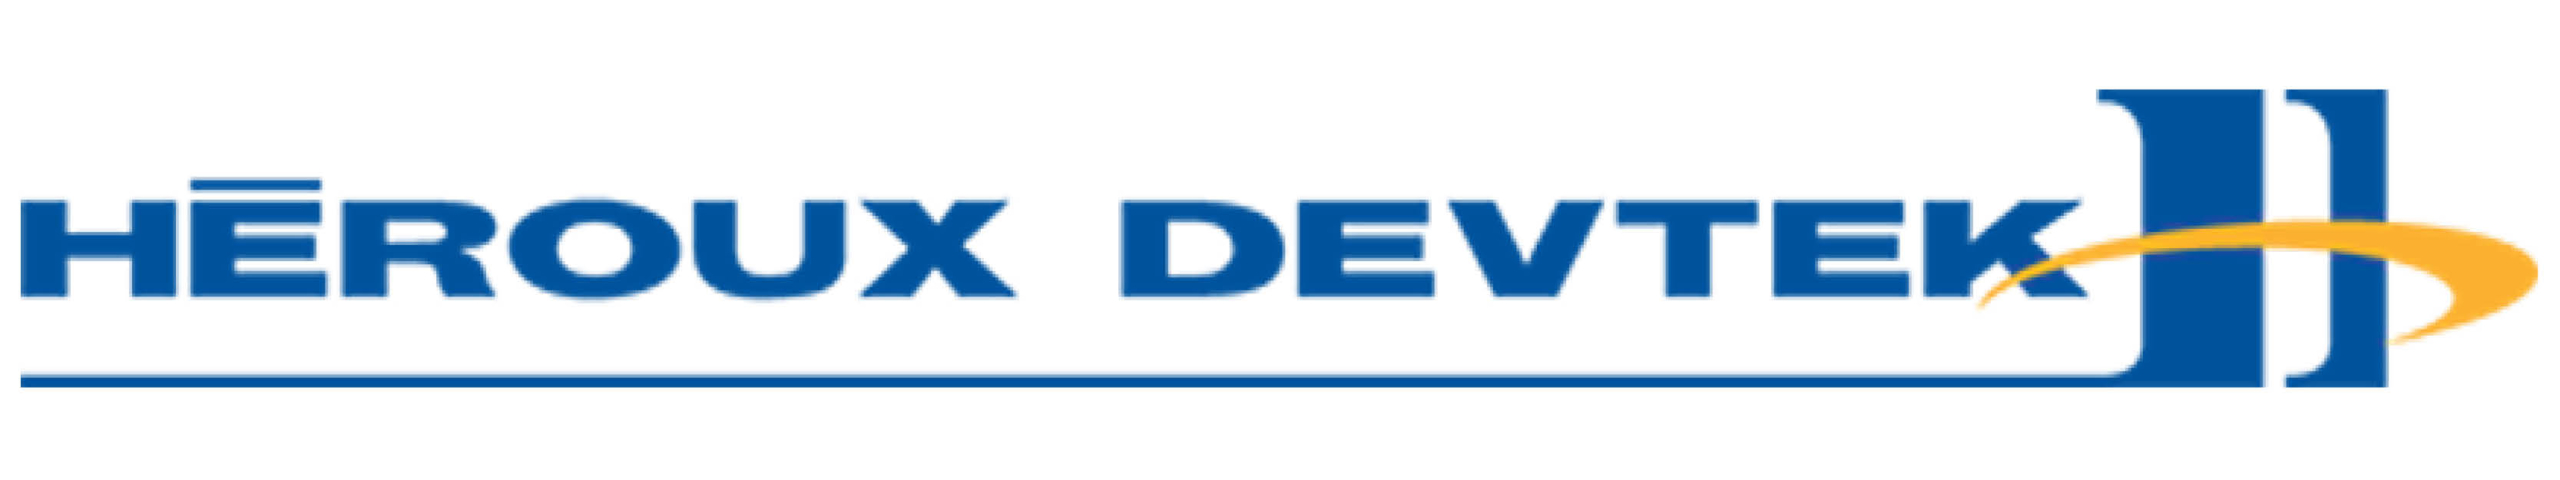 heroux devtek logo